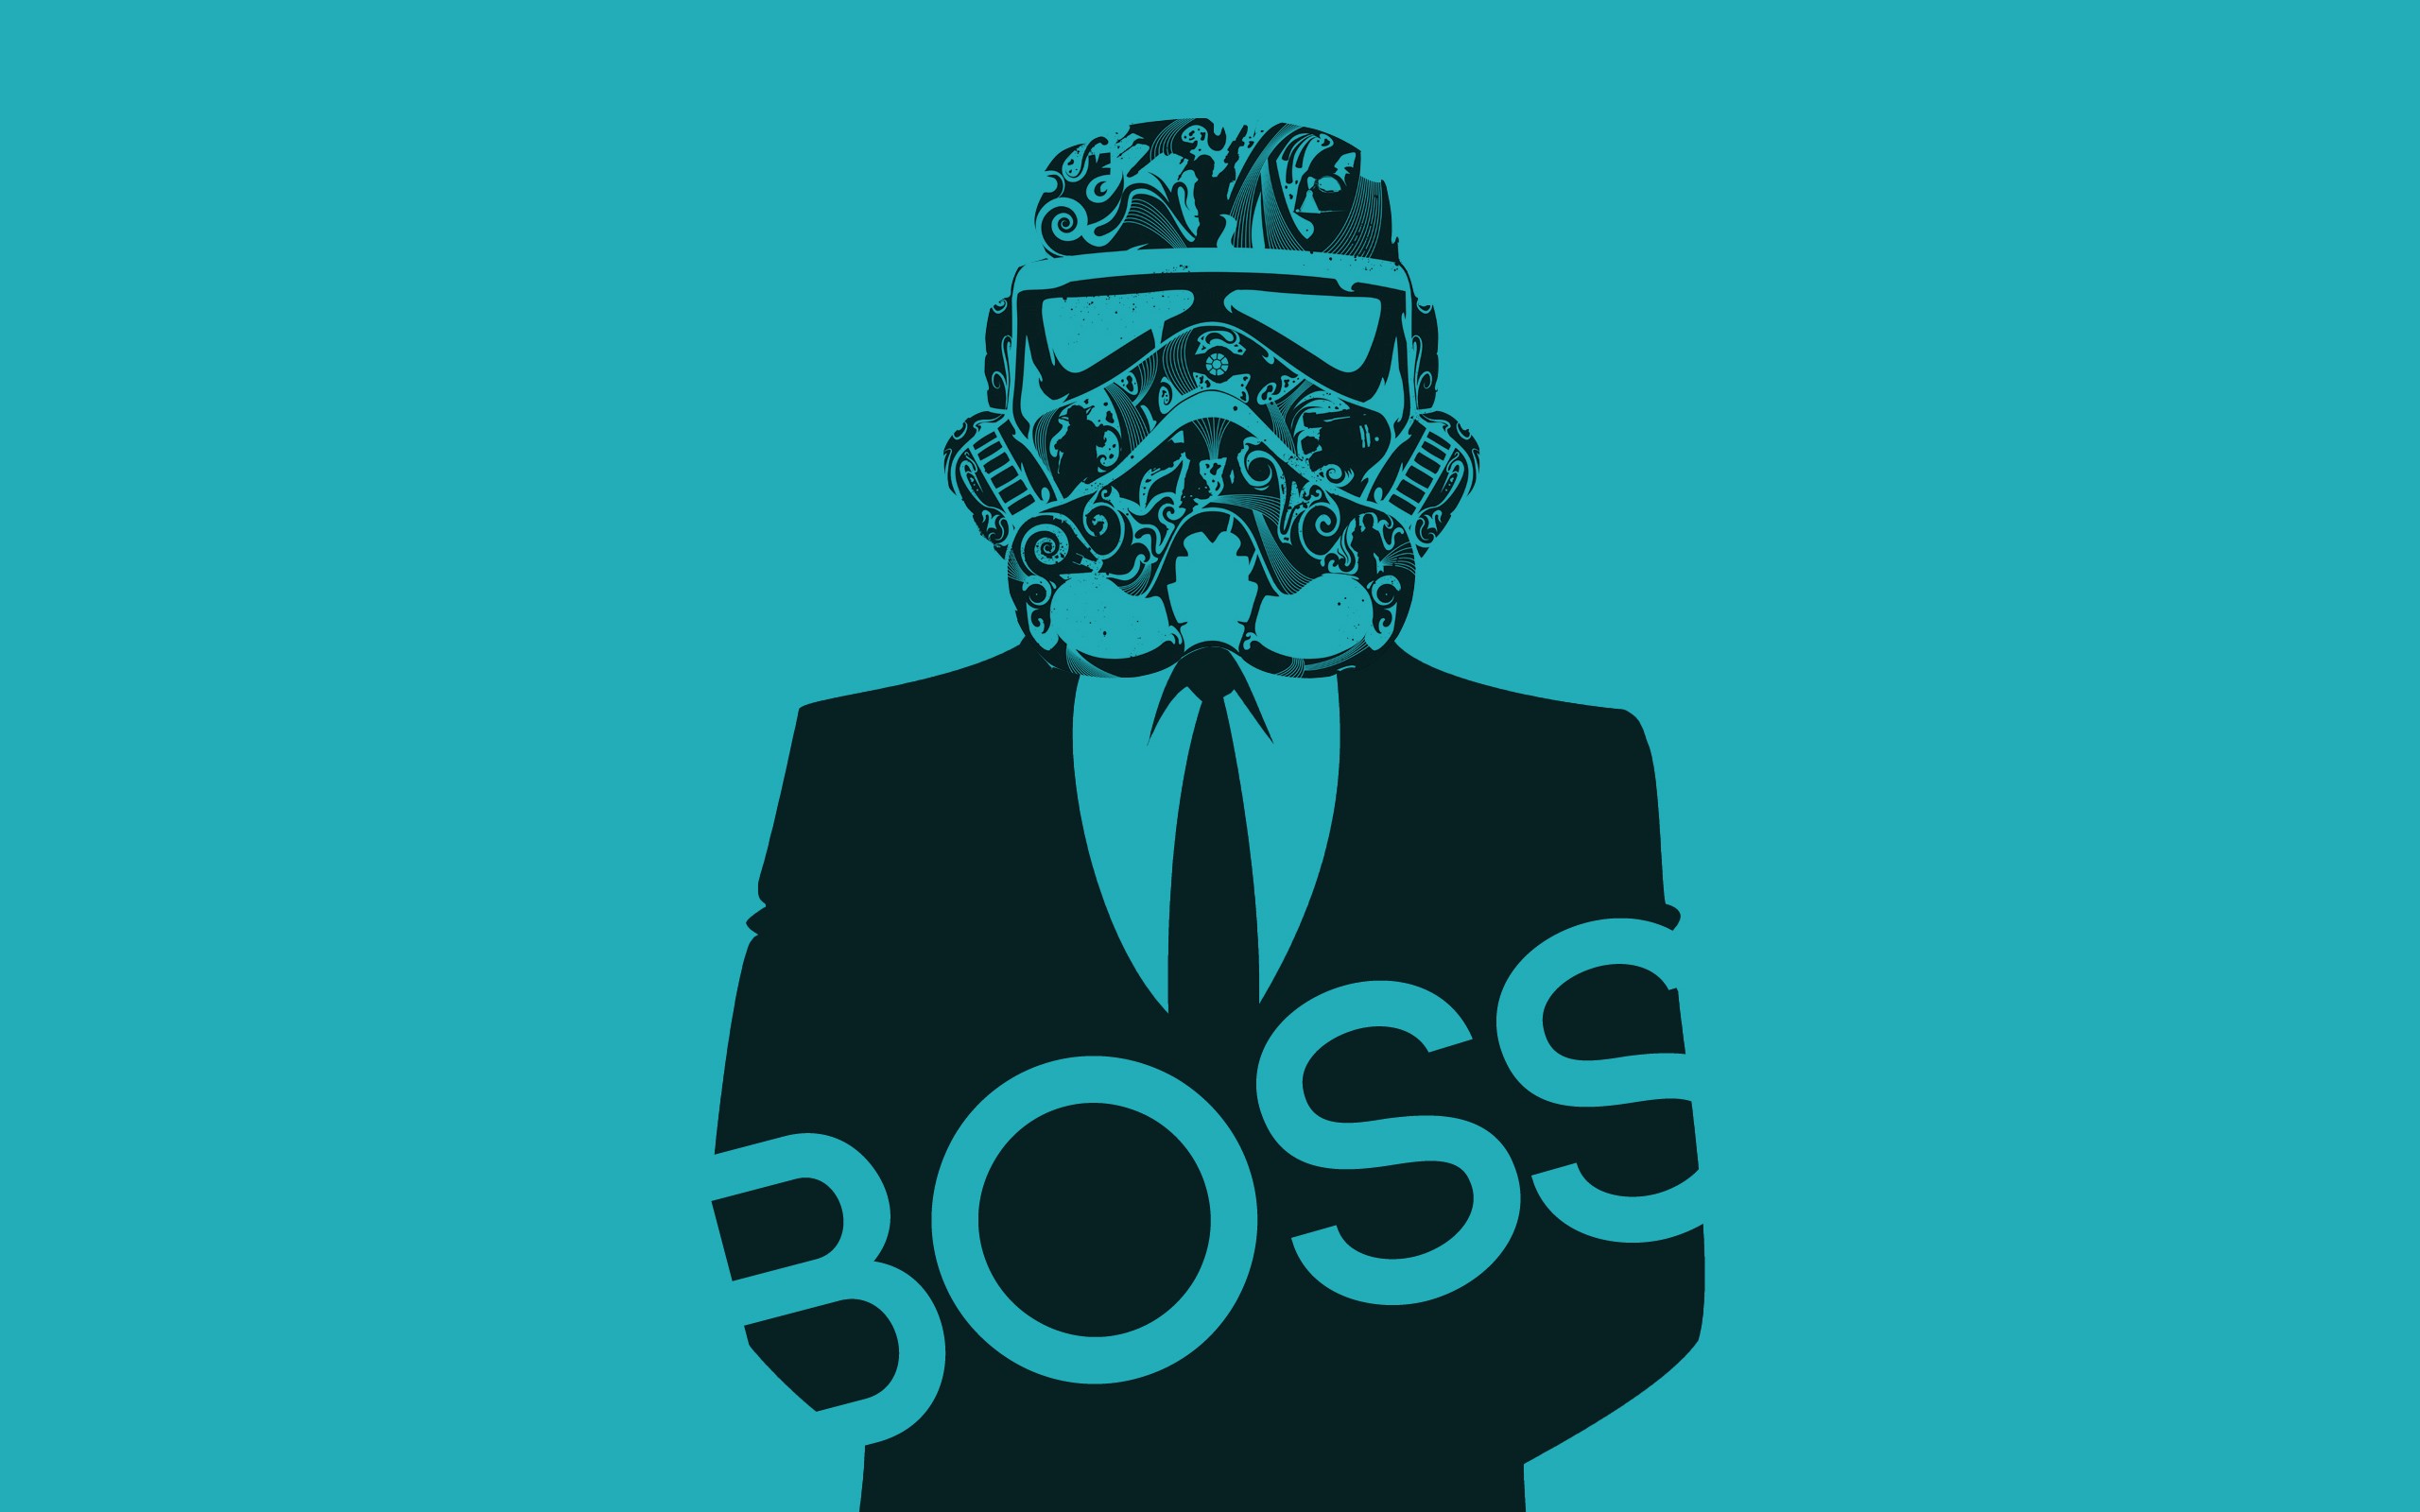 Star Wars boss Storm Trooper Wallpaper